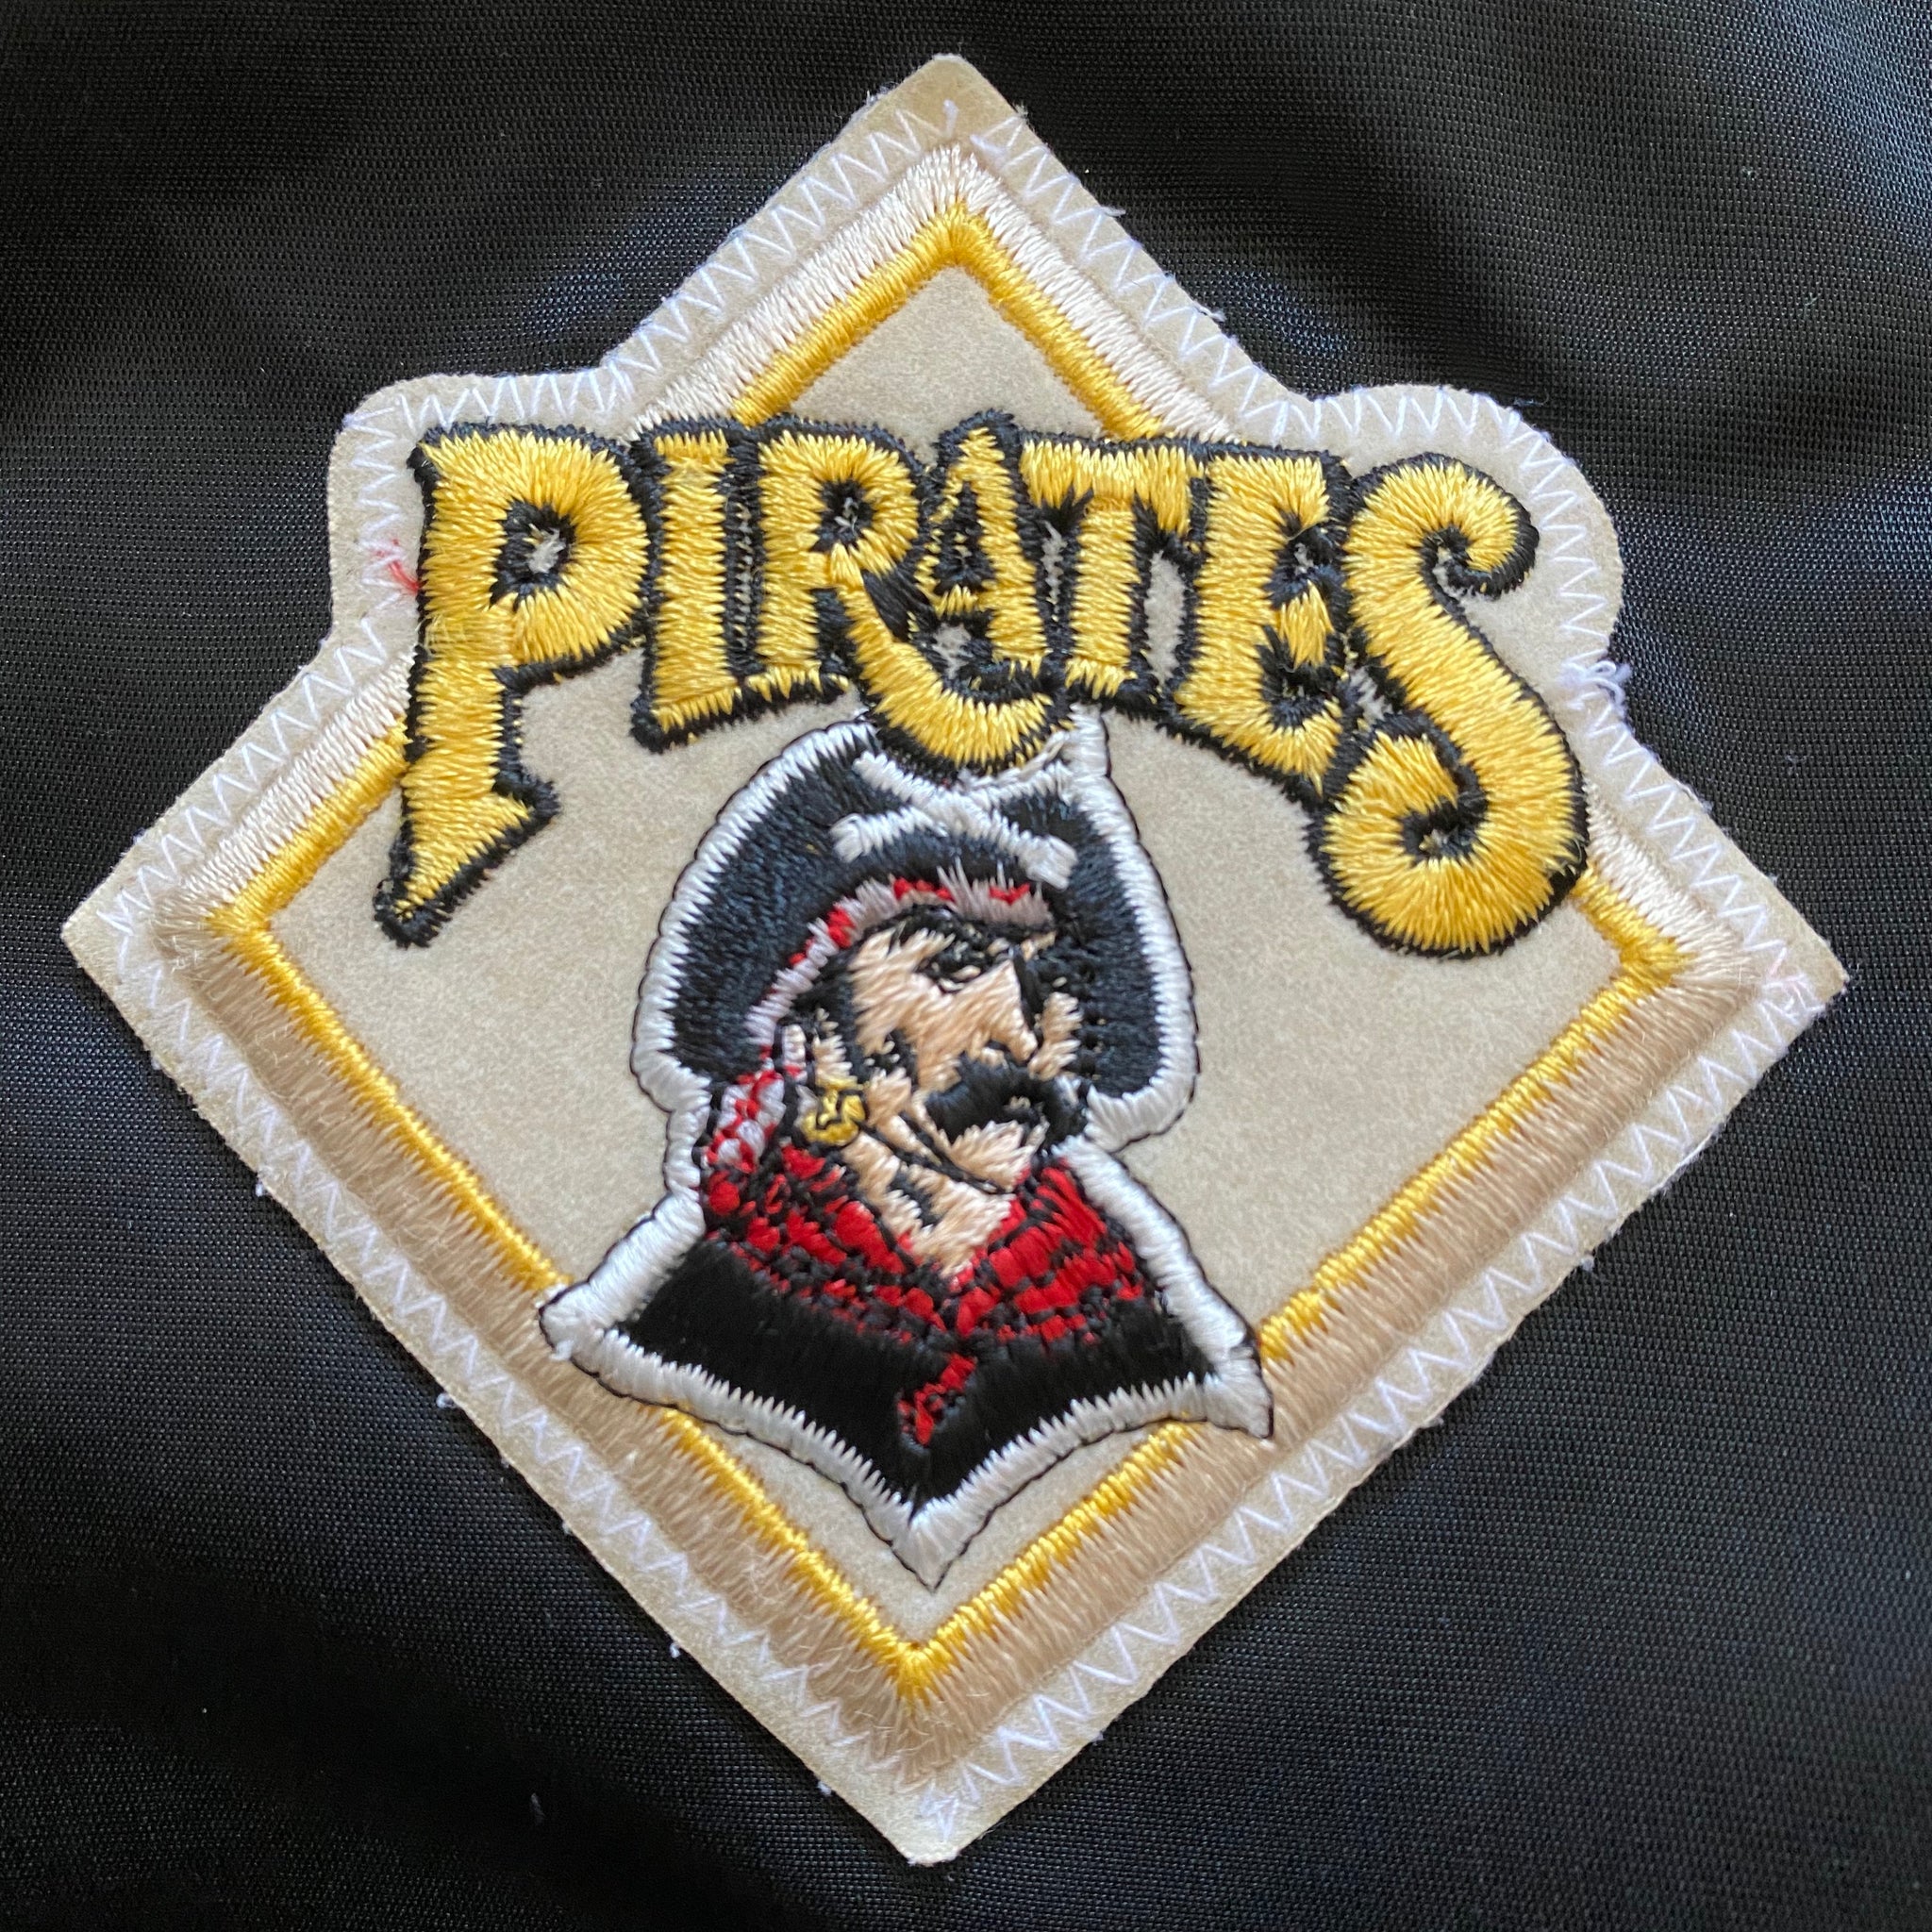 vintage Pittsburgh Pirates Starter windbreaker jacket - sz L - 90s